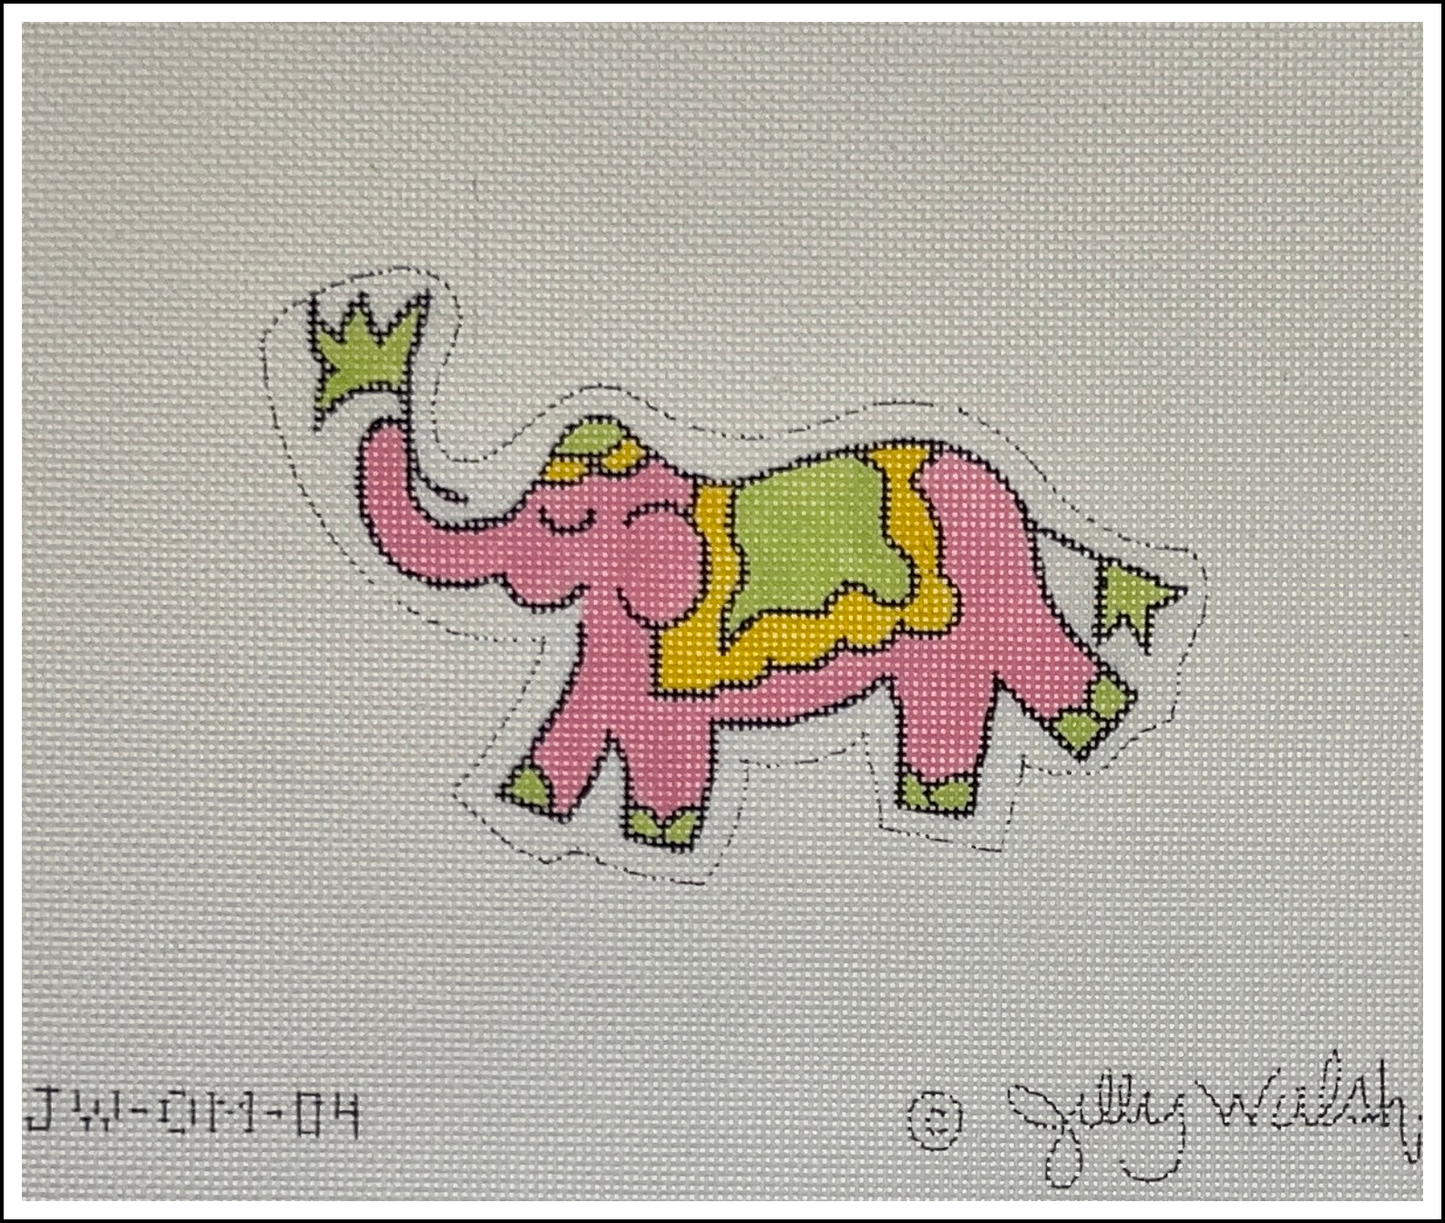 Jilly Walsh mini elephant